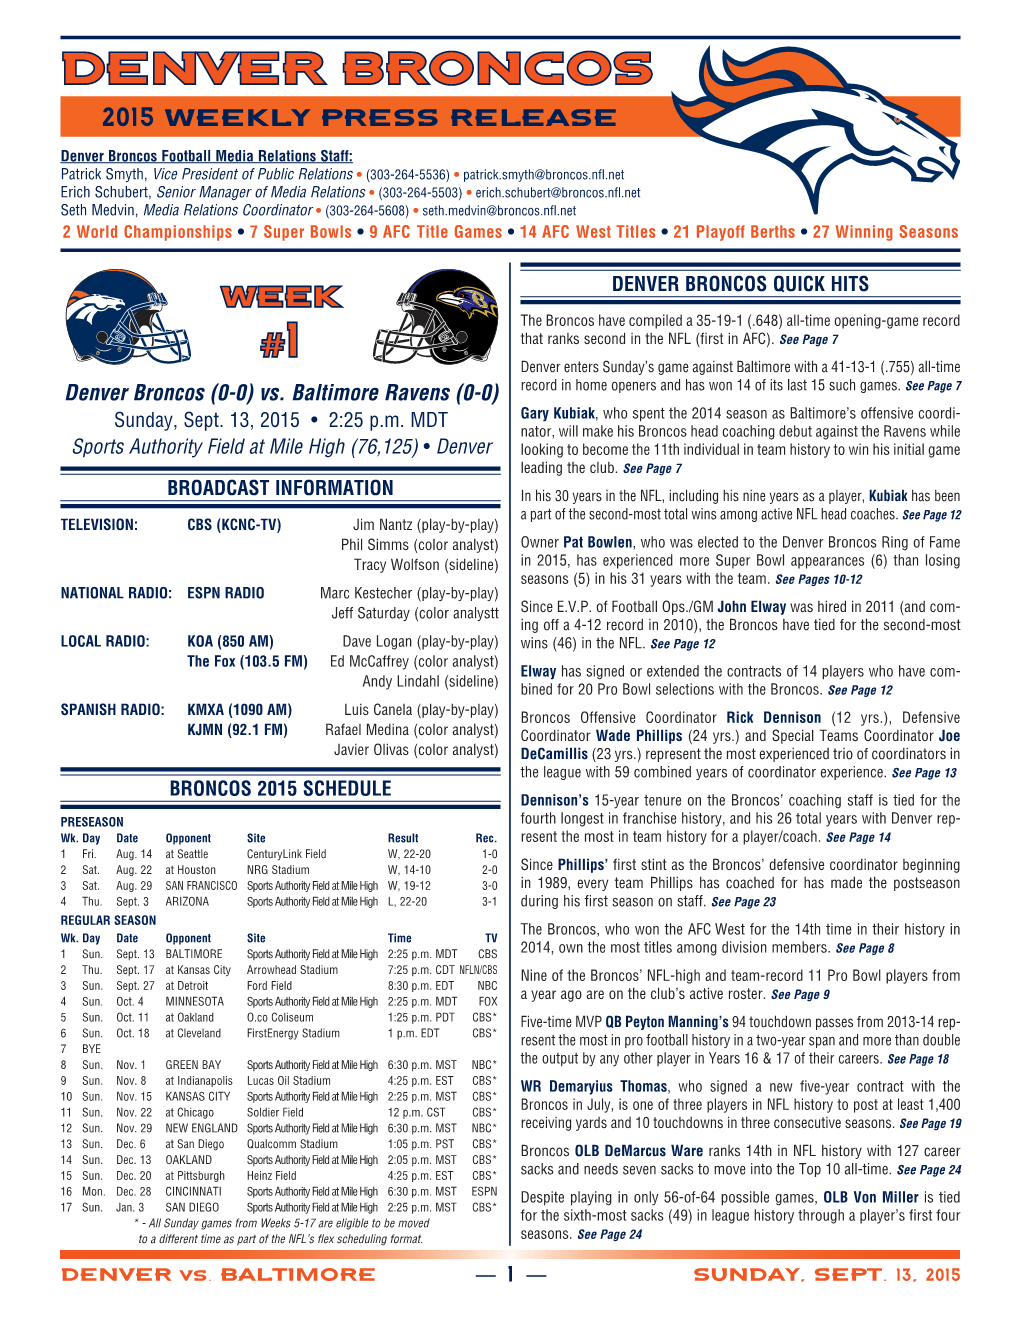 Denver Broncos Weekly Release Packet (Vs. Baltimore, 9/13/15)